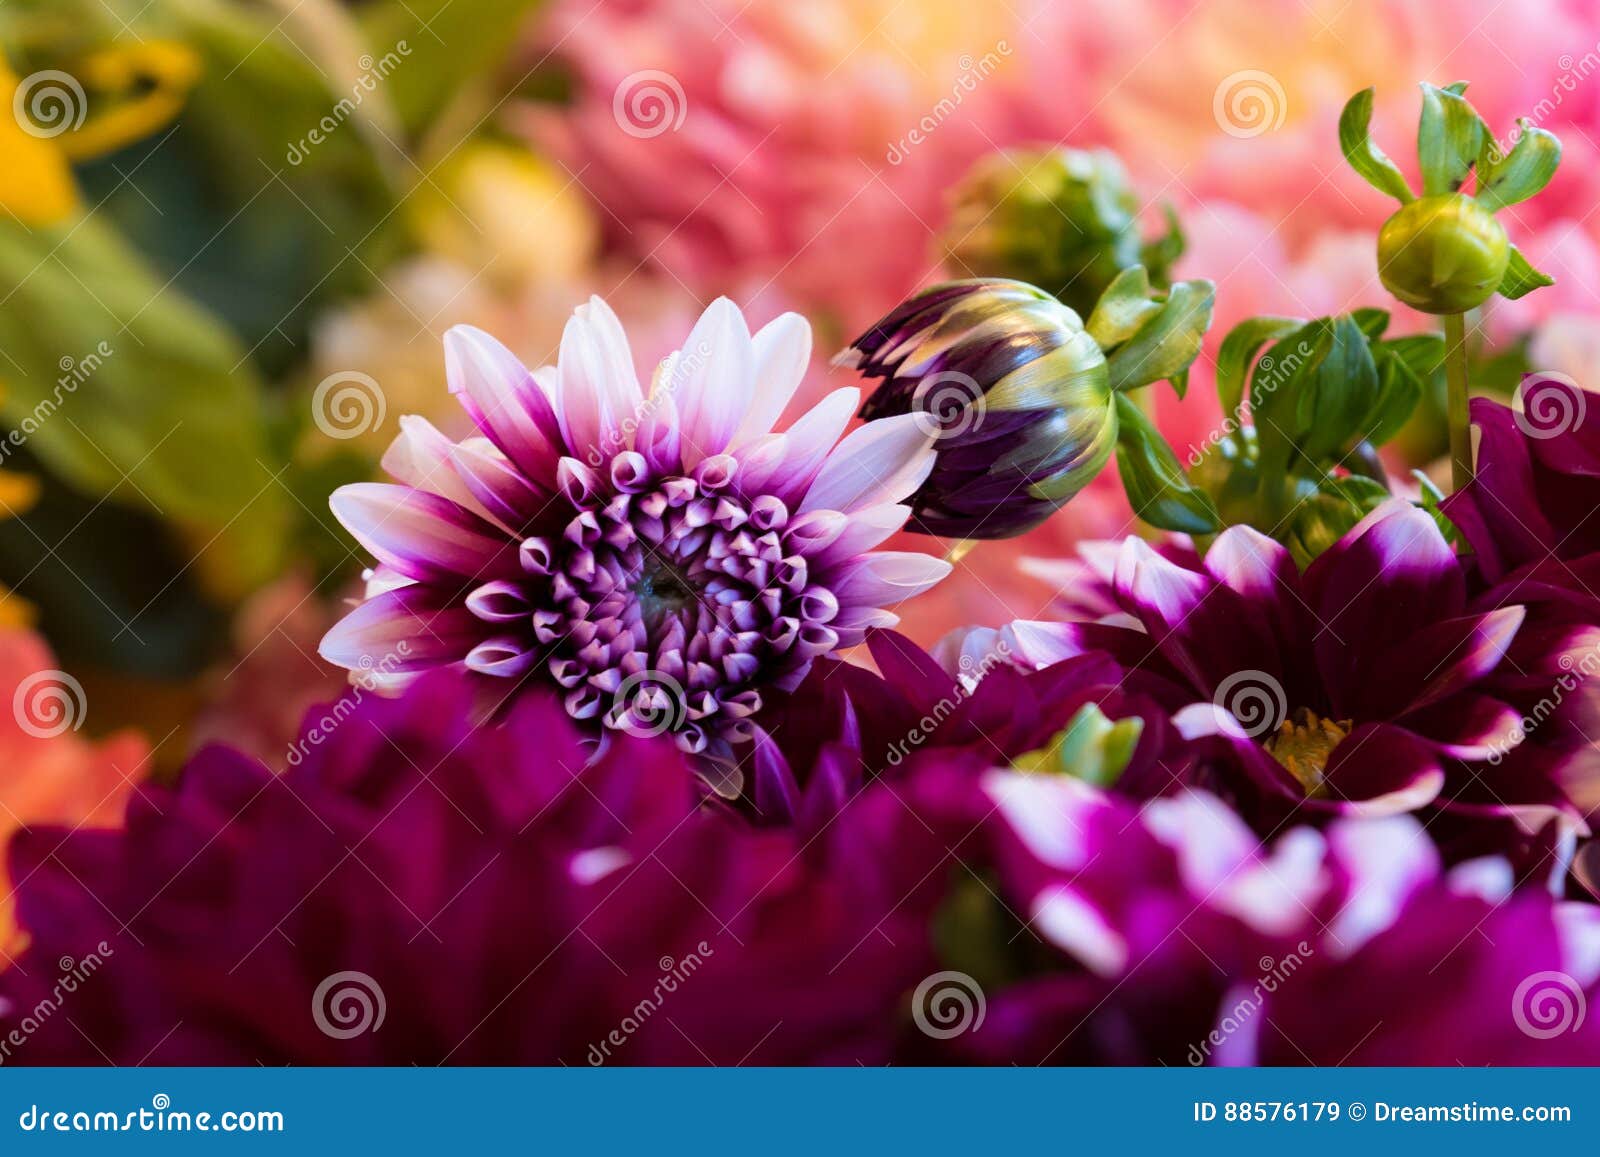 Flower Kisses Make Them Bloom Stock Image - Image of marketplace ...